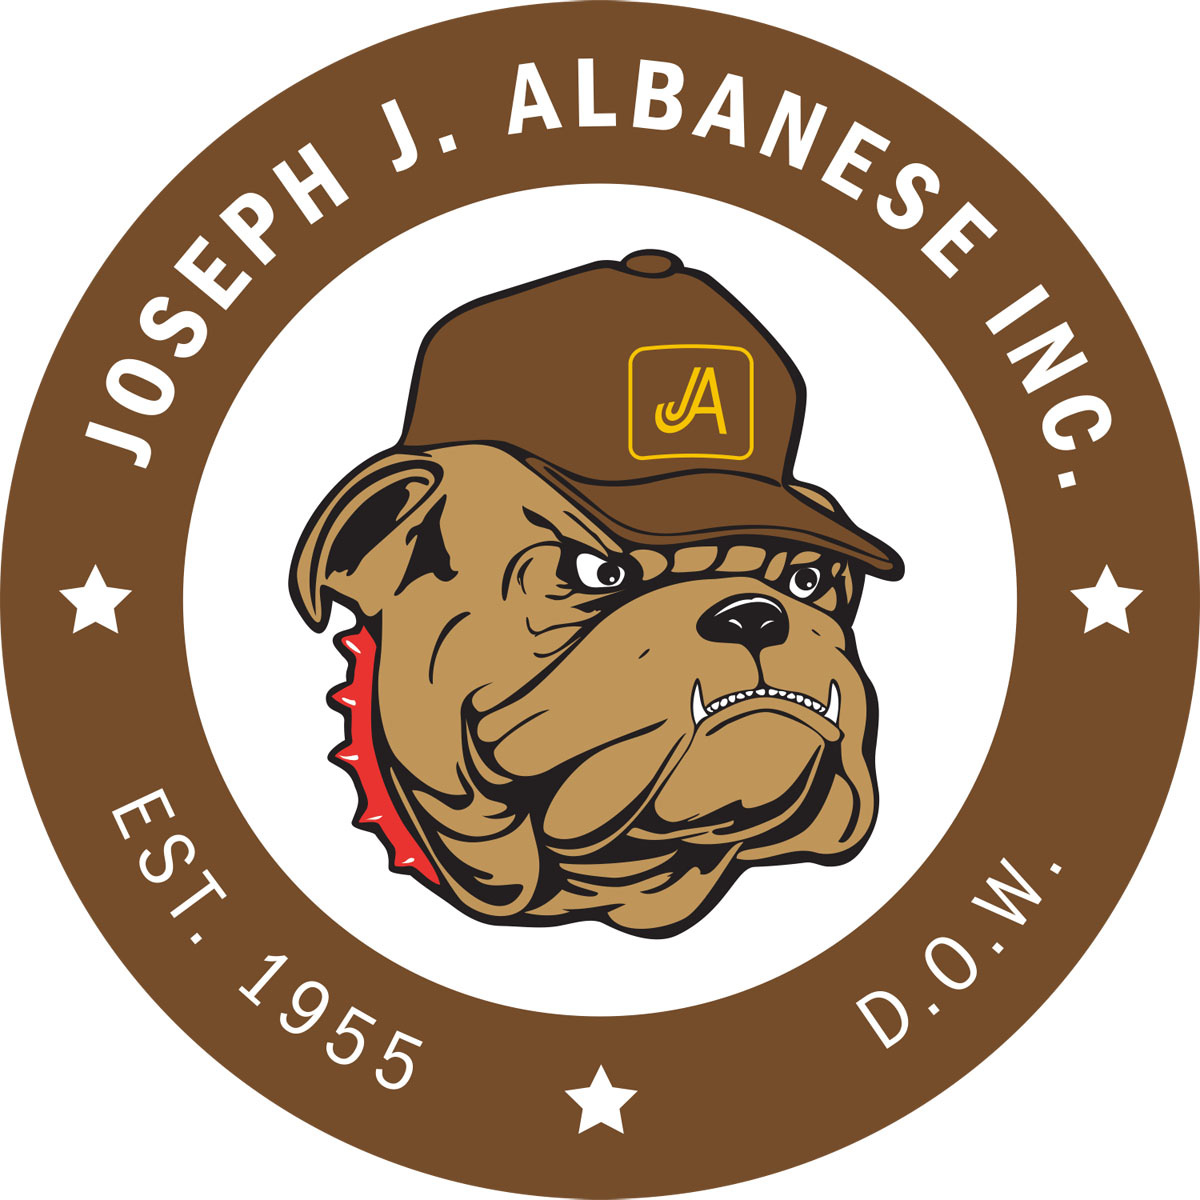 Joseph J. Albanese Inc.